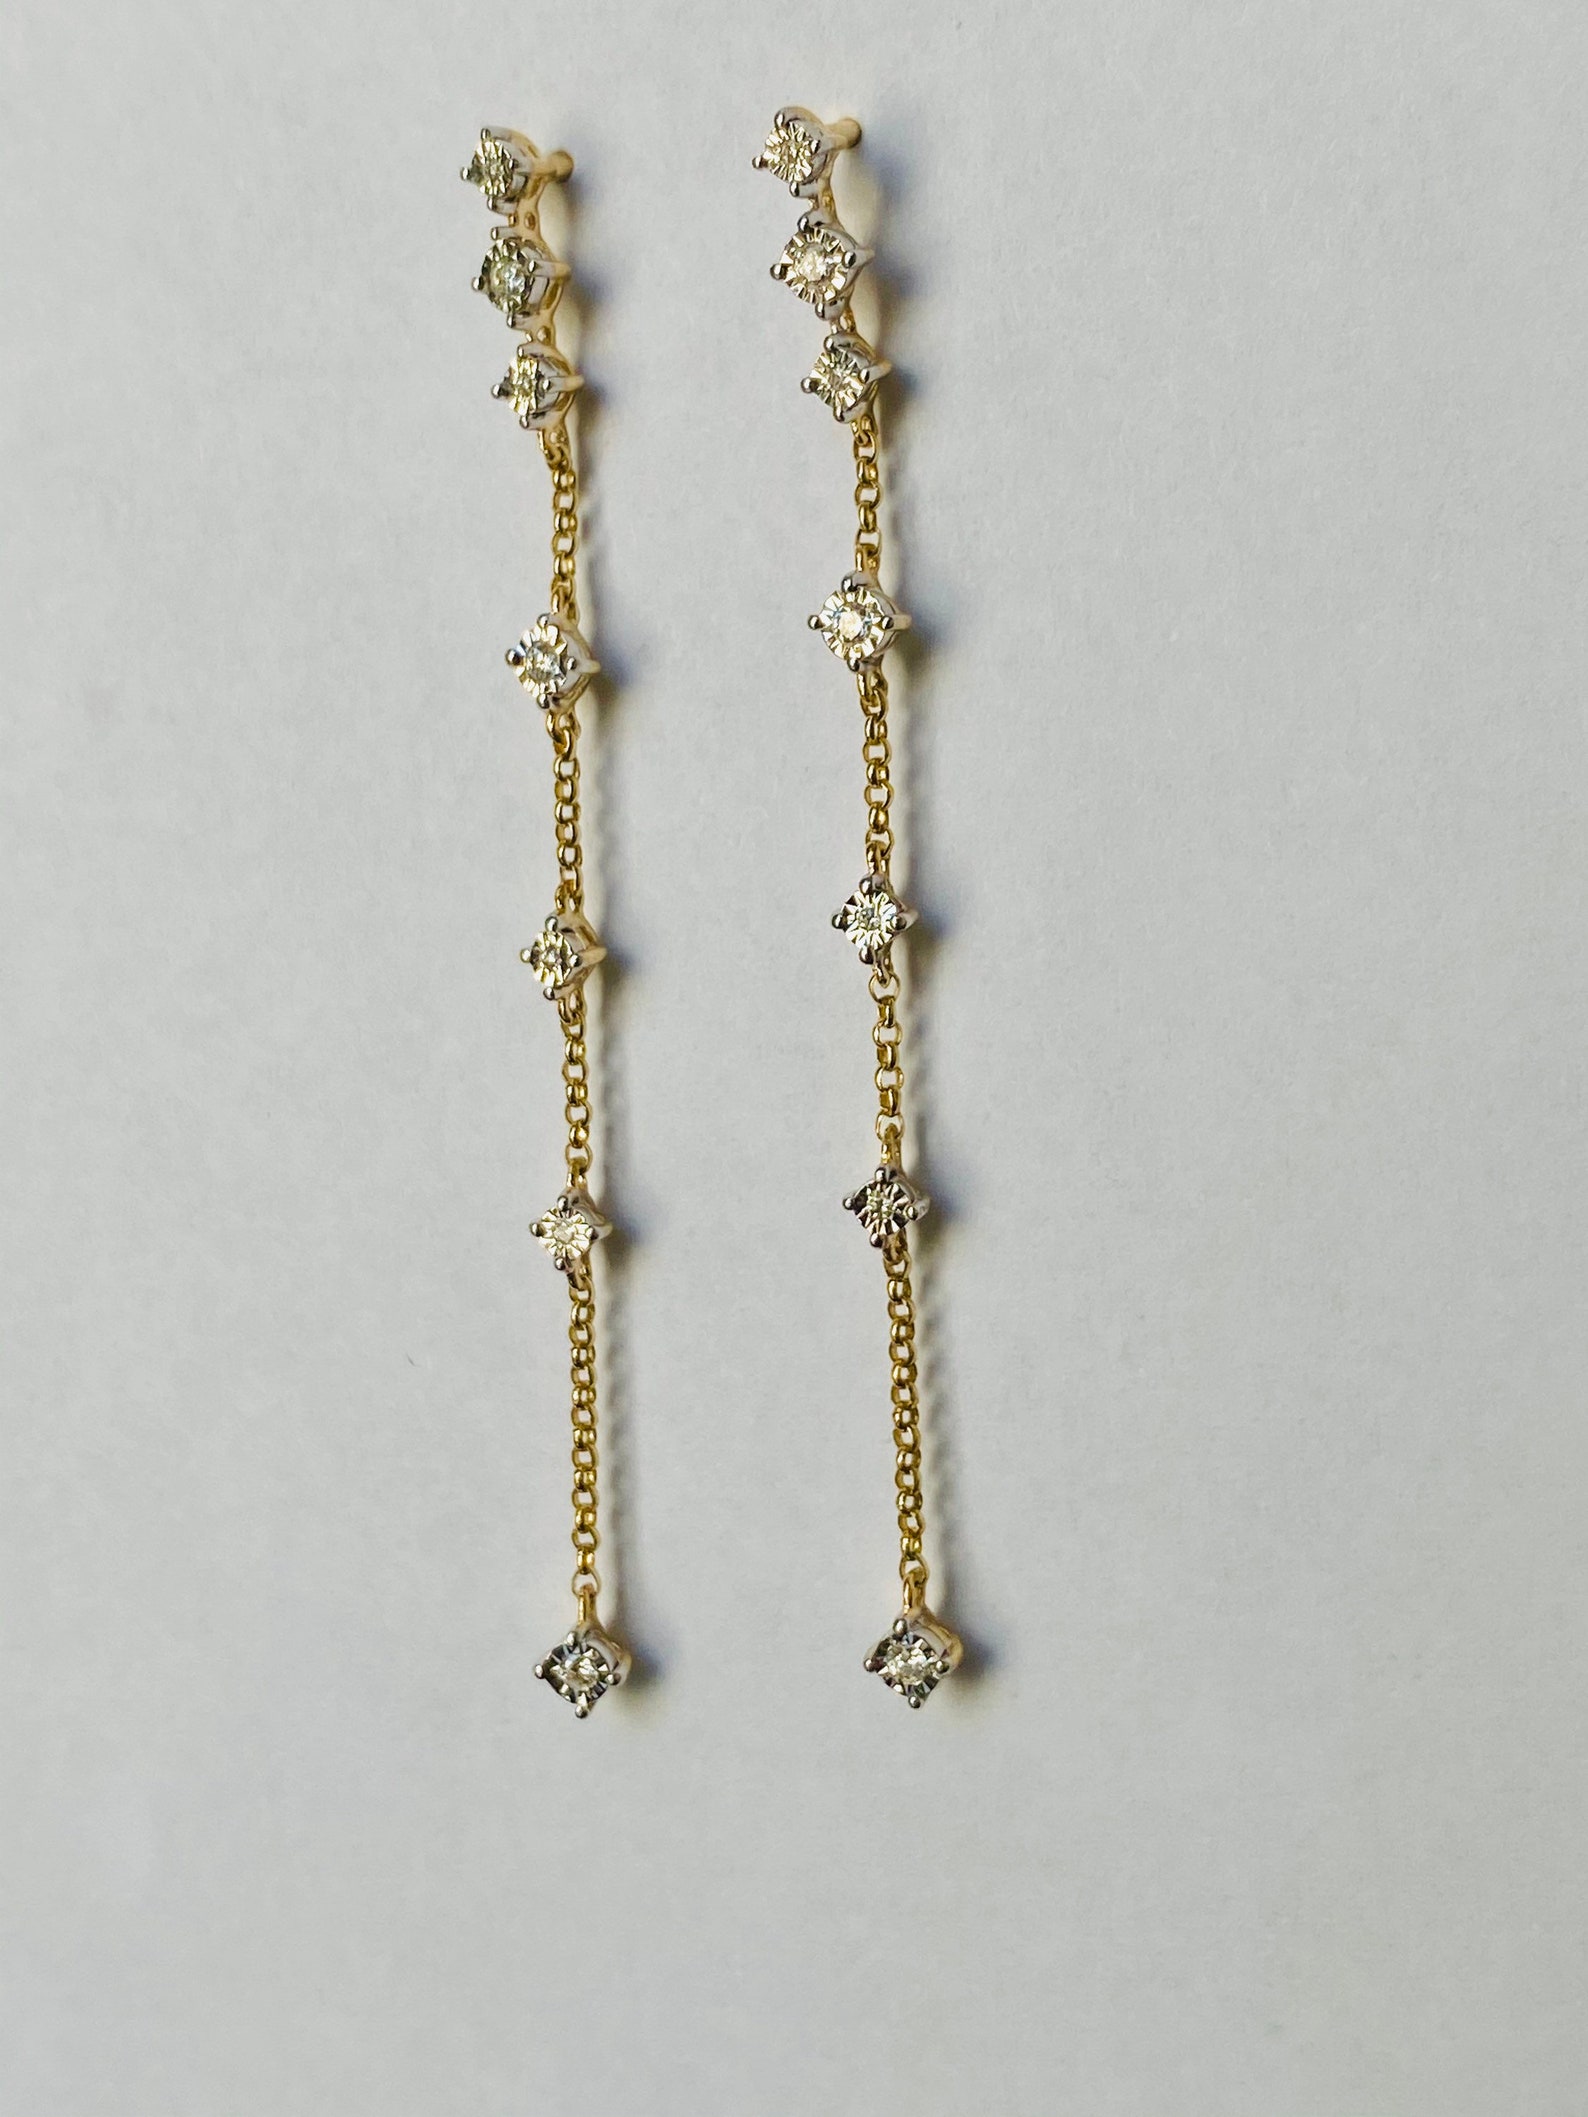 14k Diamond Drop Earrings Rose Gold Dangle Earrings Tiny - Etsy